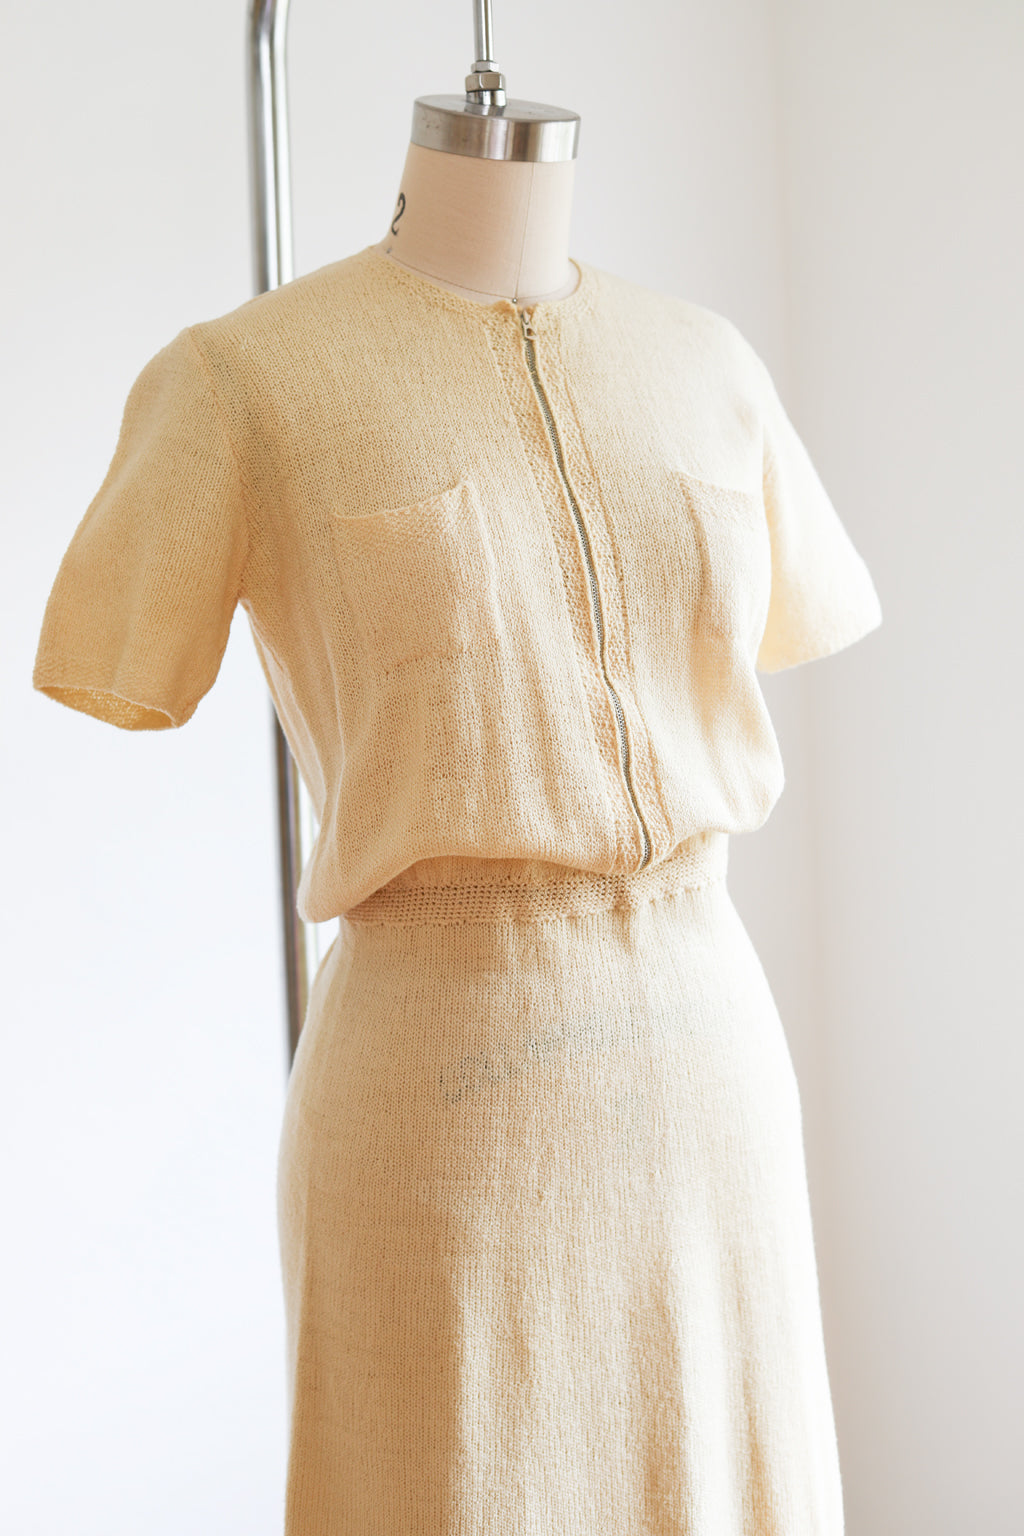 Vintage 1930s Knit Dress - Super Sweetie-Pie Hand-Made Knitwear Dress w Bell Pull Front Metal Zipper Size XS to M